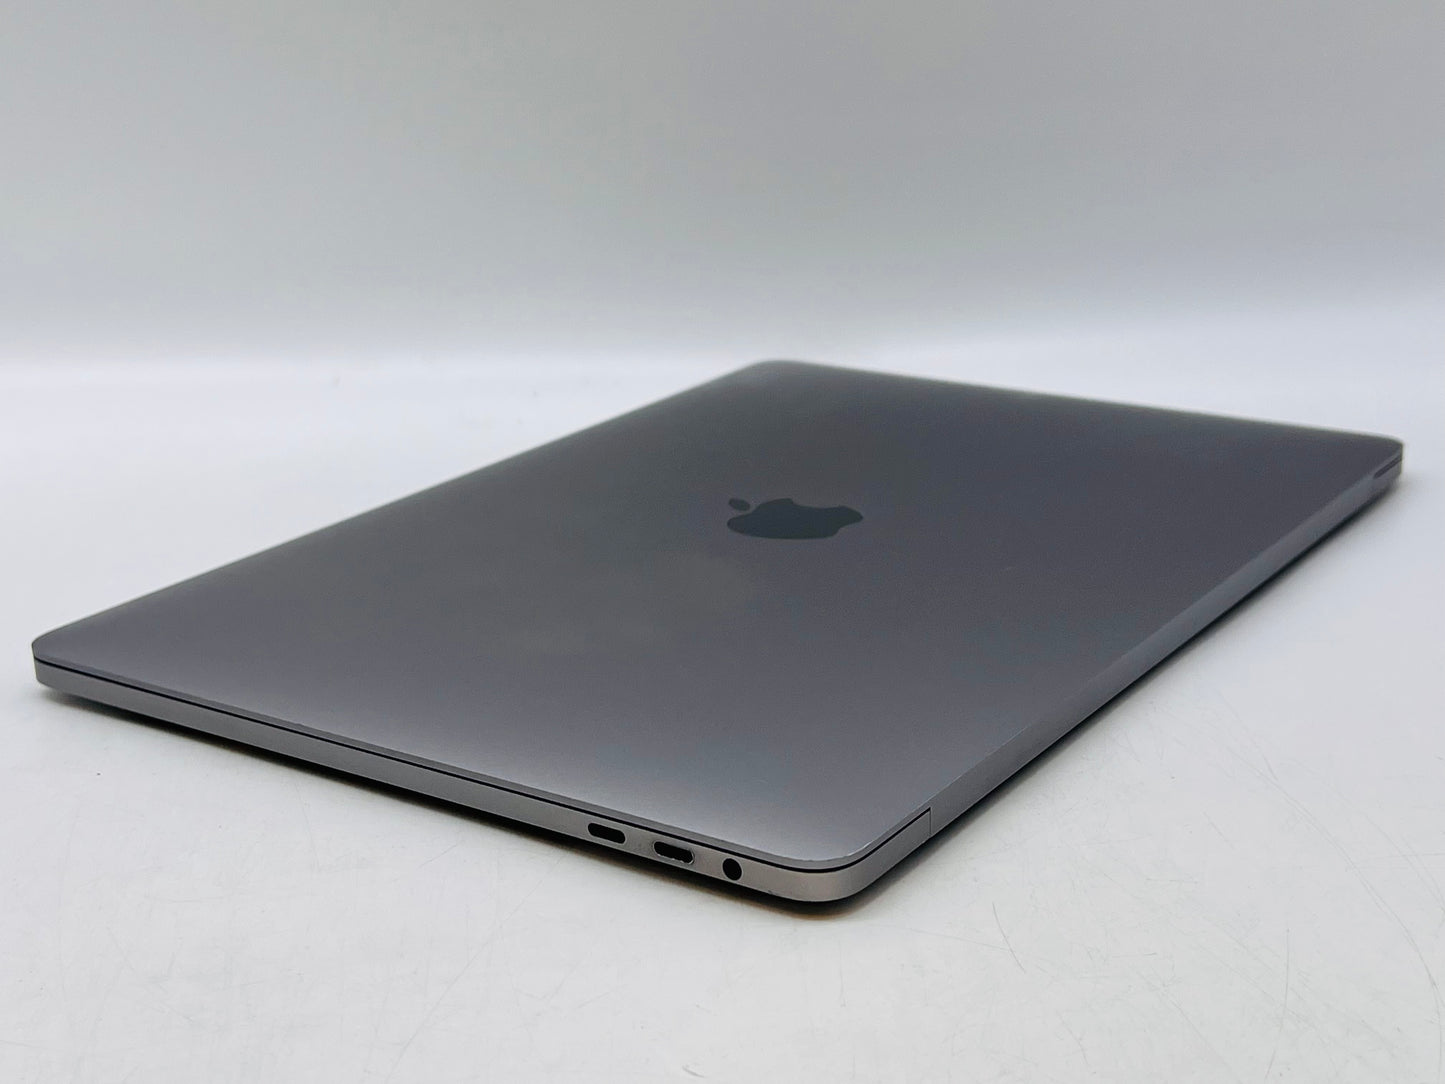 #5 2020 MacBook Pro 13 in TB 2.0GHz Quad-Core i5 16GB RAM 512GB SSD Great condition